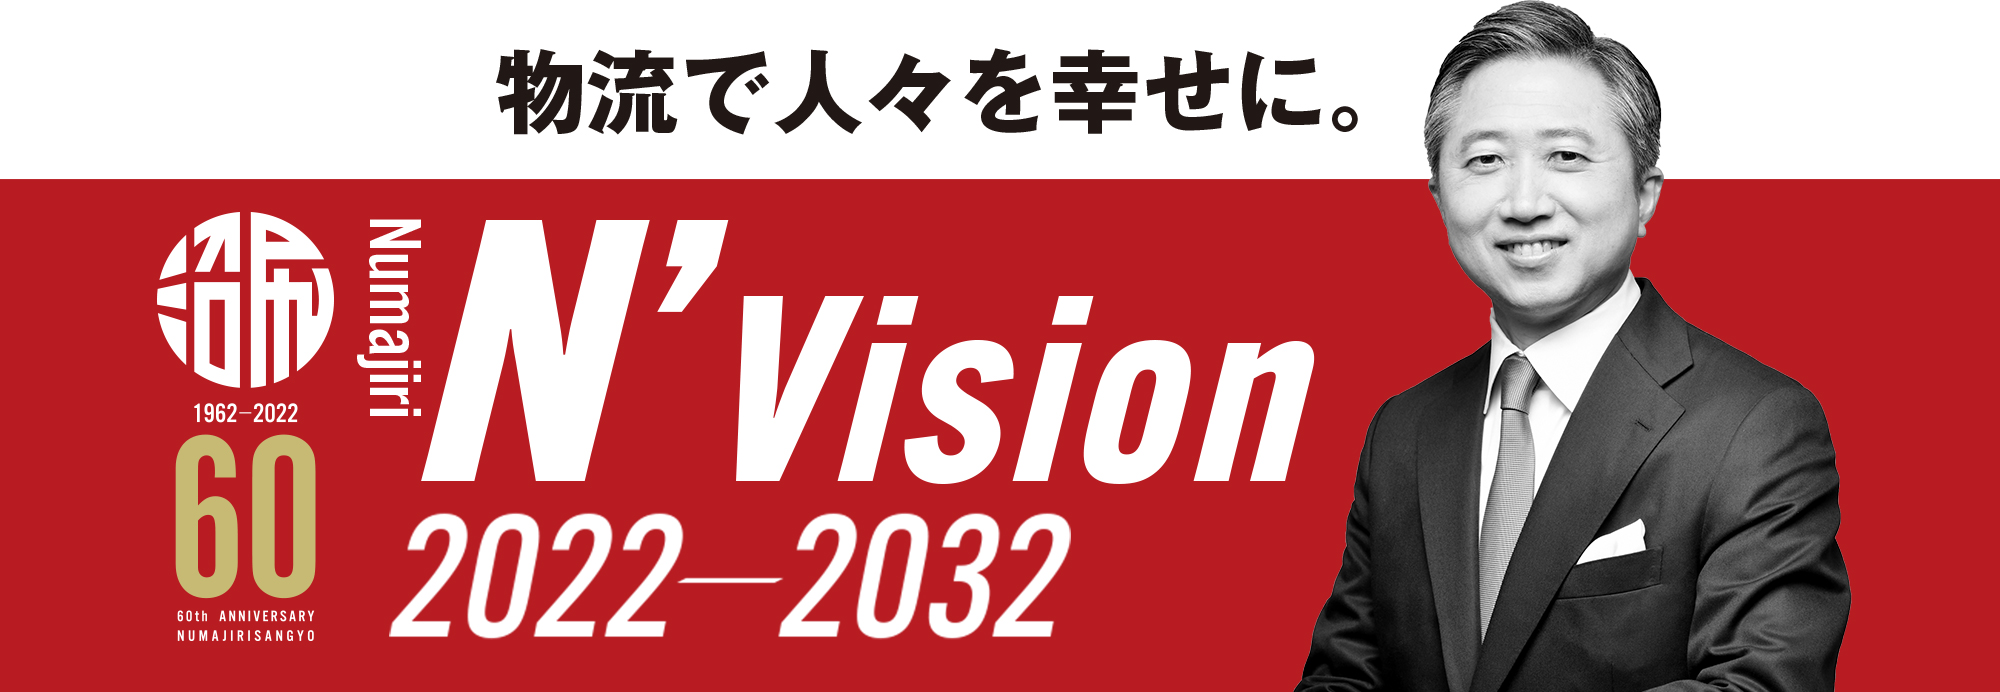 N’Vision2022-2032 ー物流で人々を幸せに。